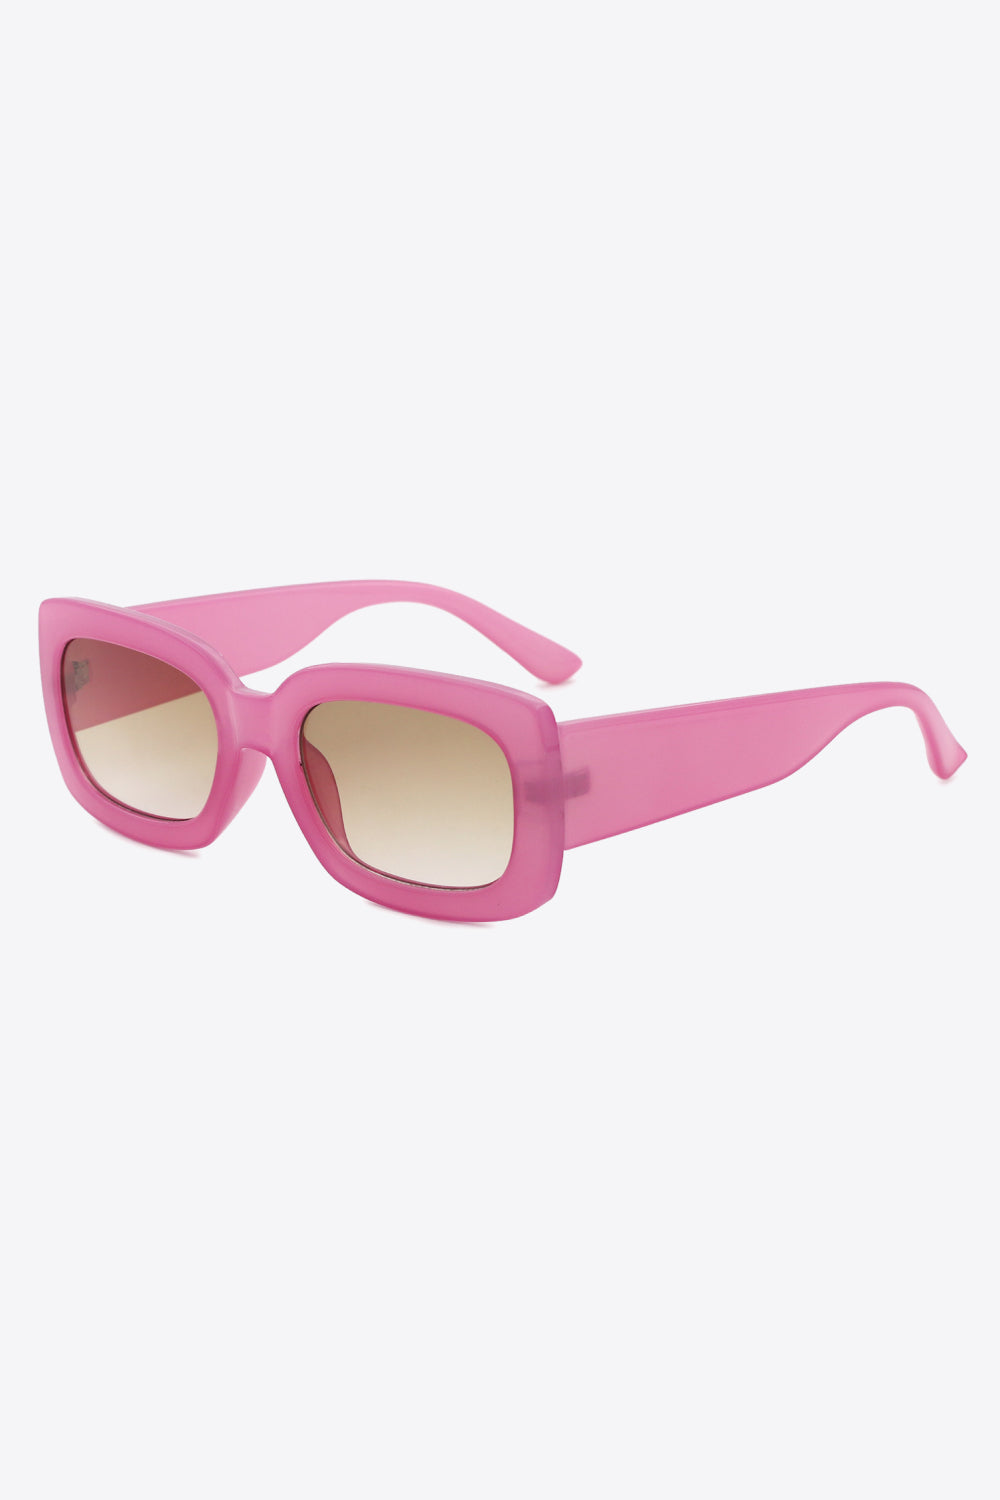 Polycarbonate Frame Rectangle Sunglasses - The Fashion Unicorn